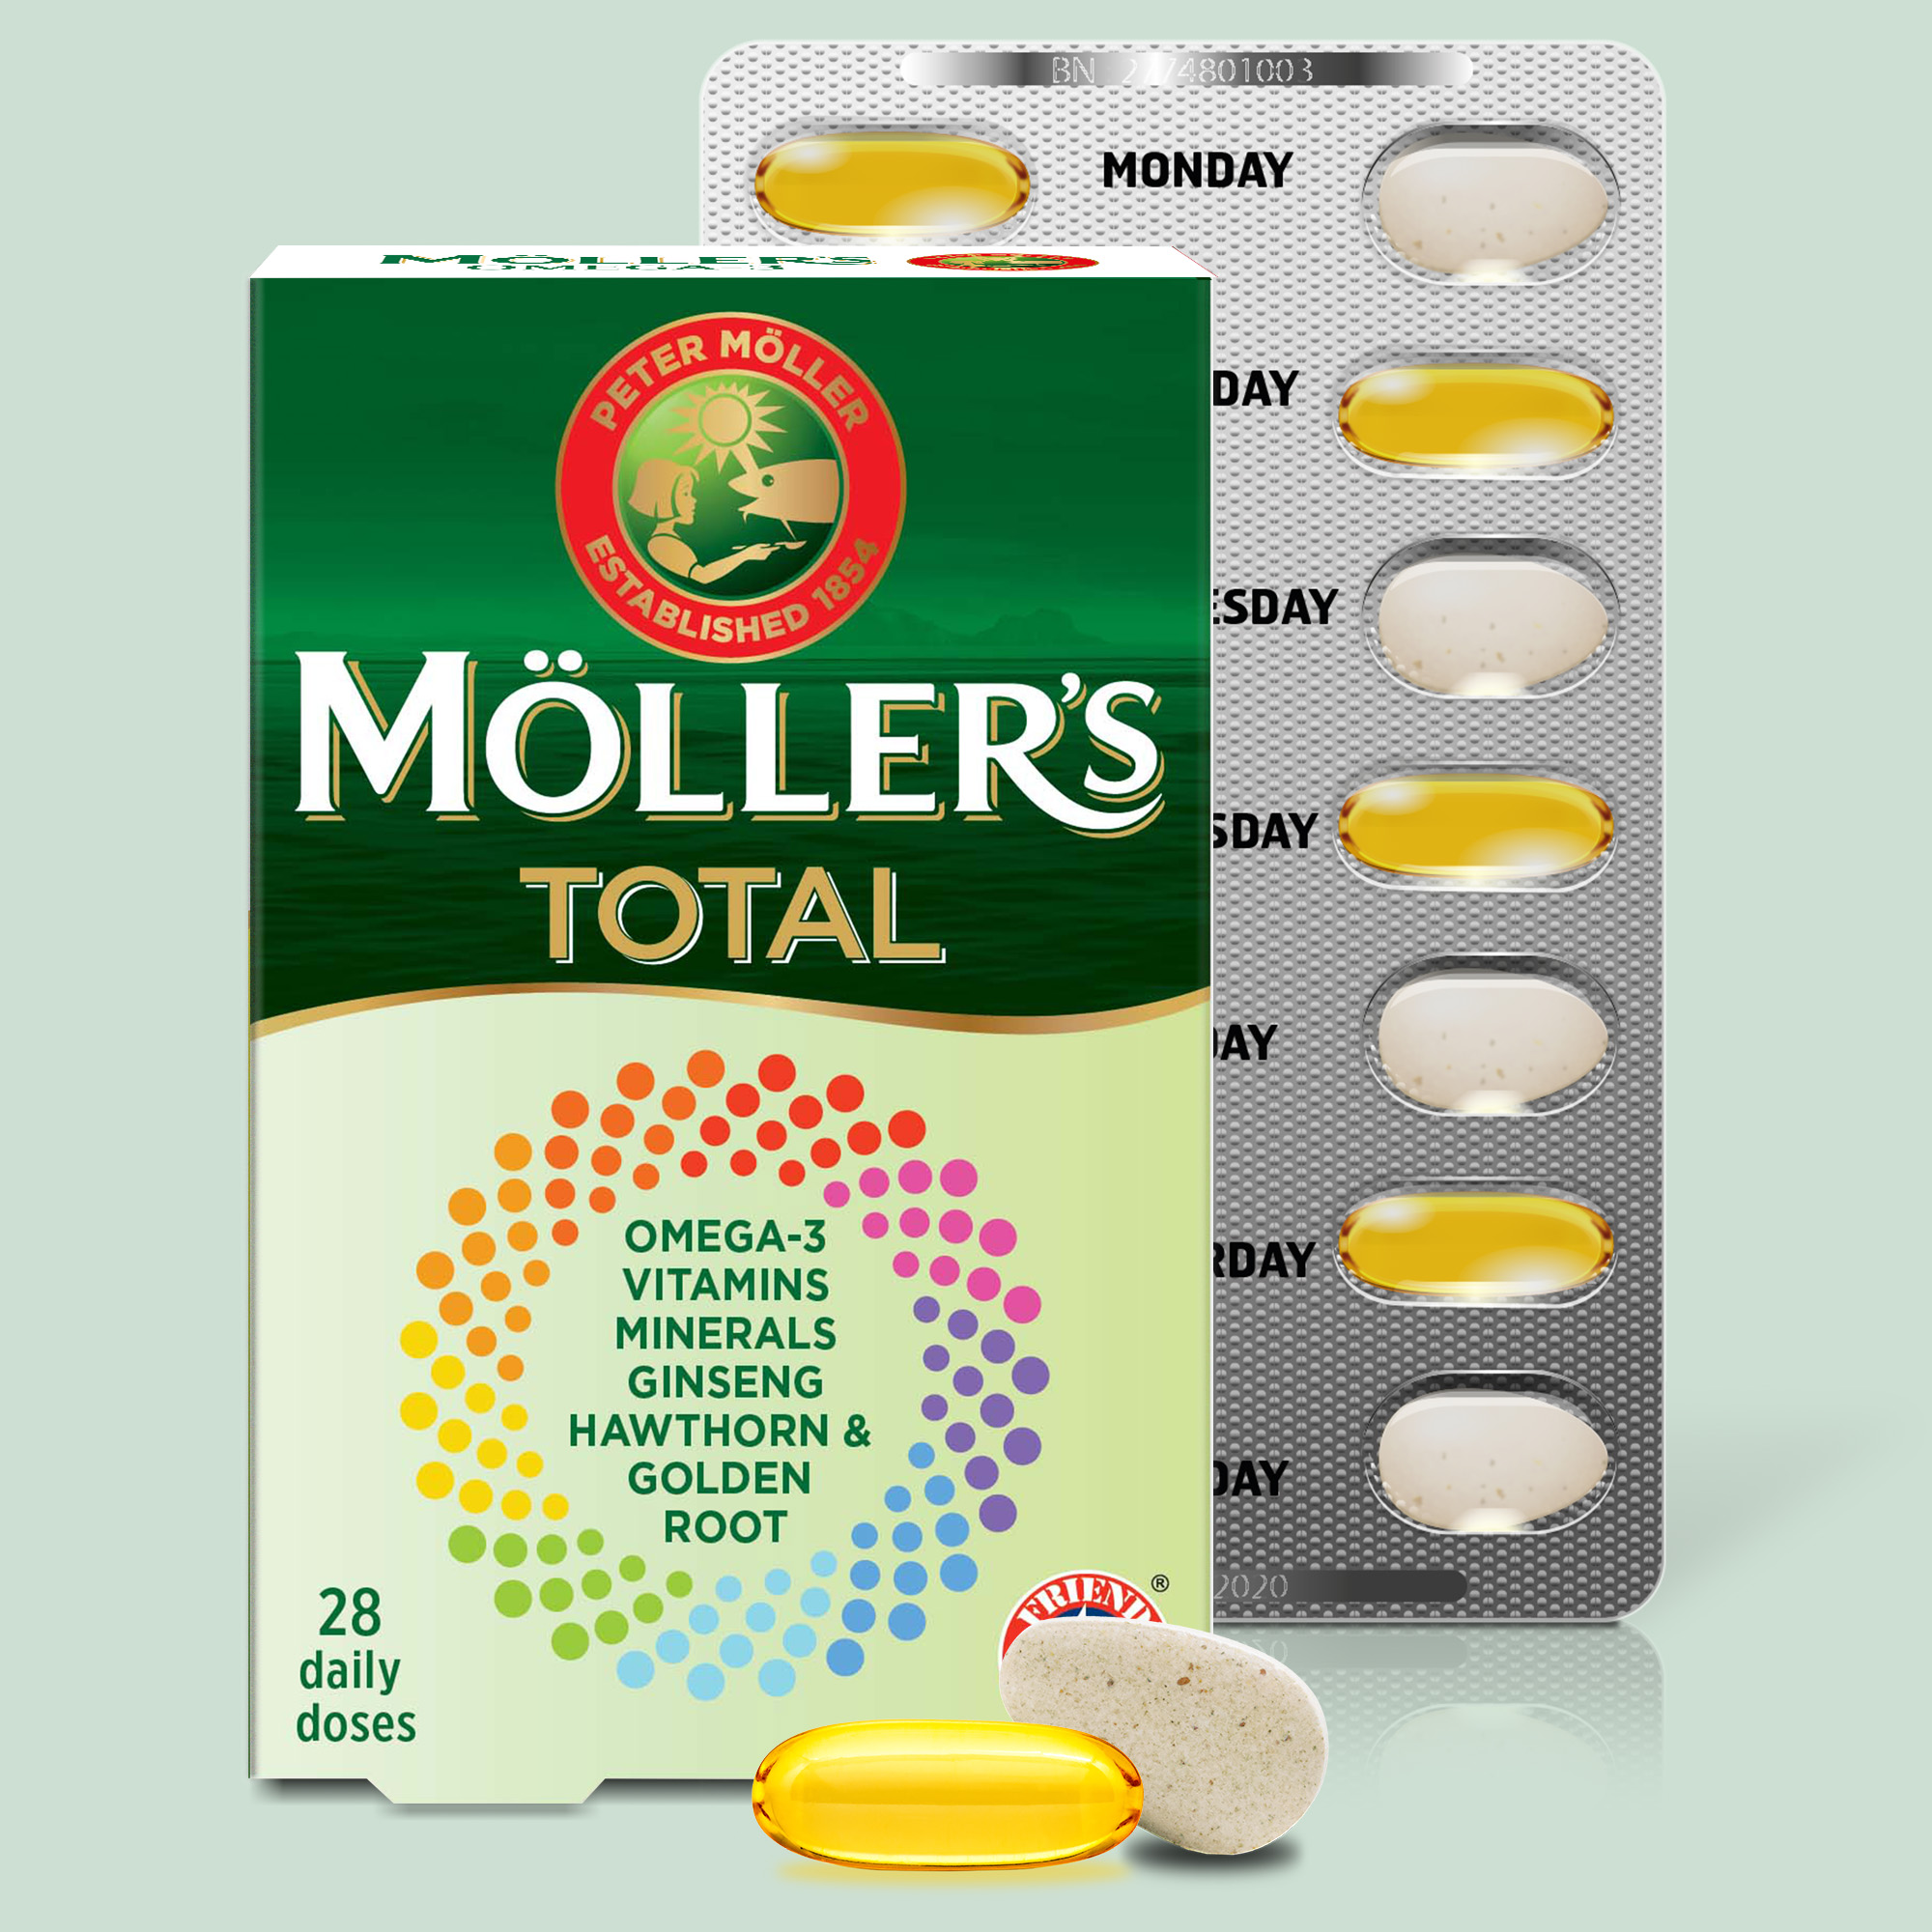 Moller's Omega-3 45U, PharmacyClub